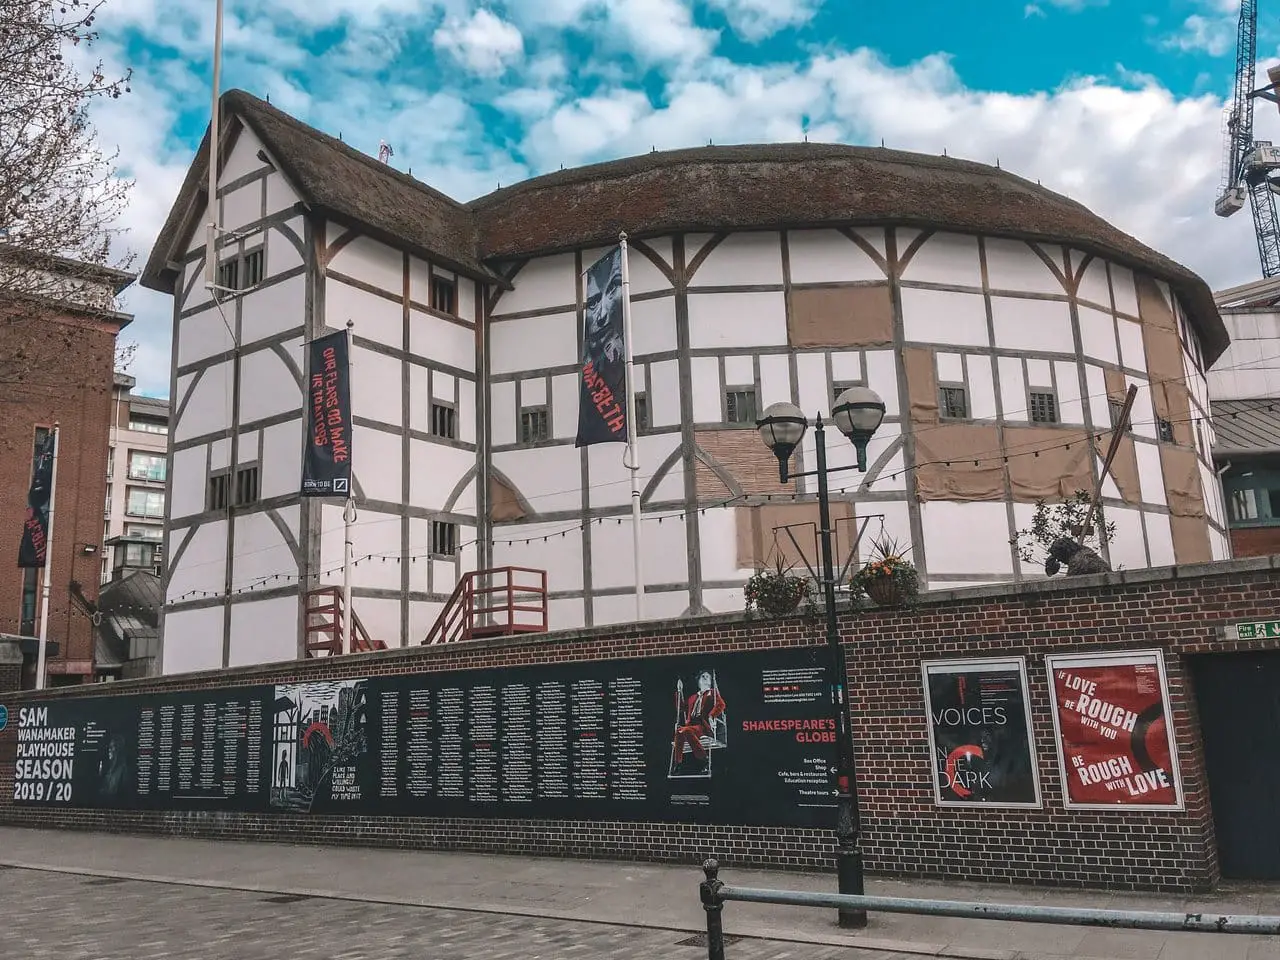 Shakespeare's Globe Theatre in London, England